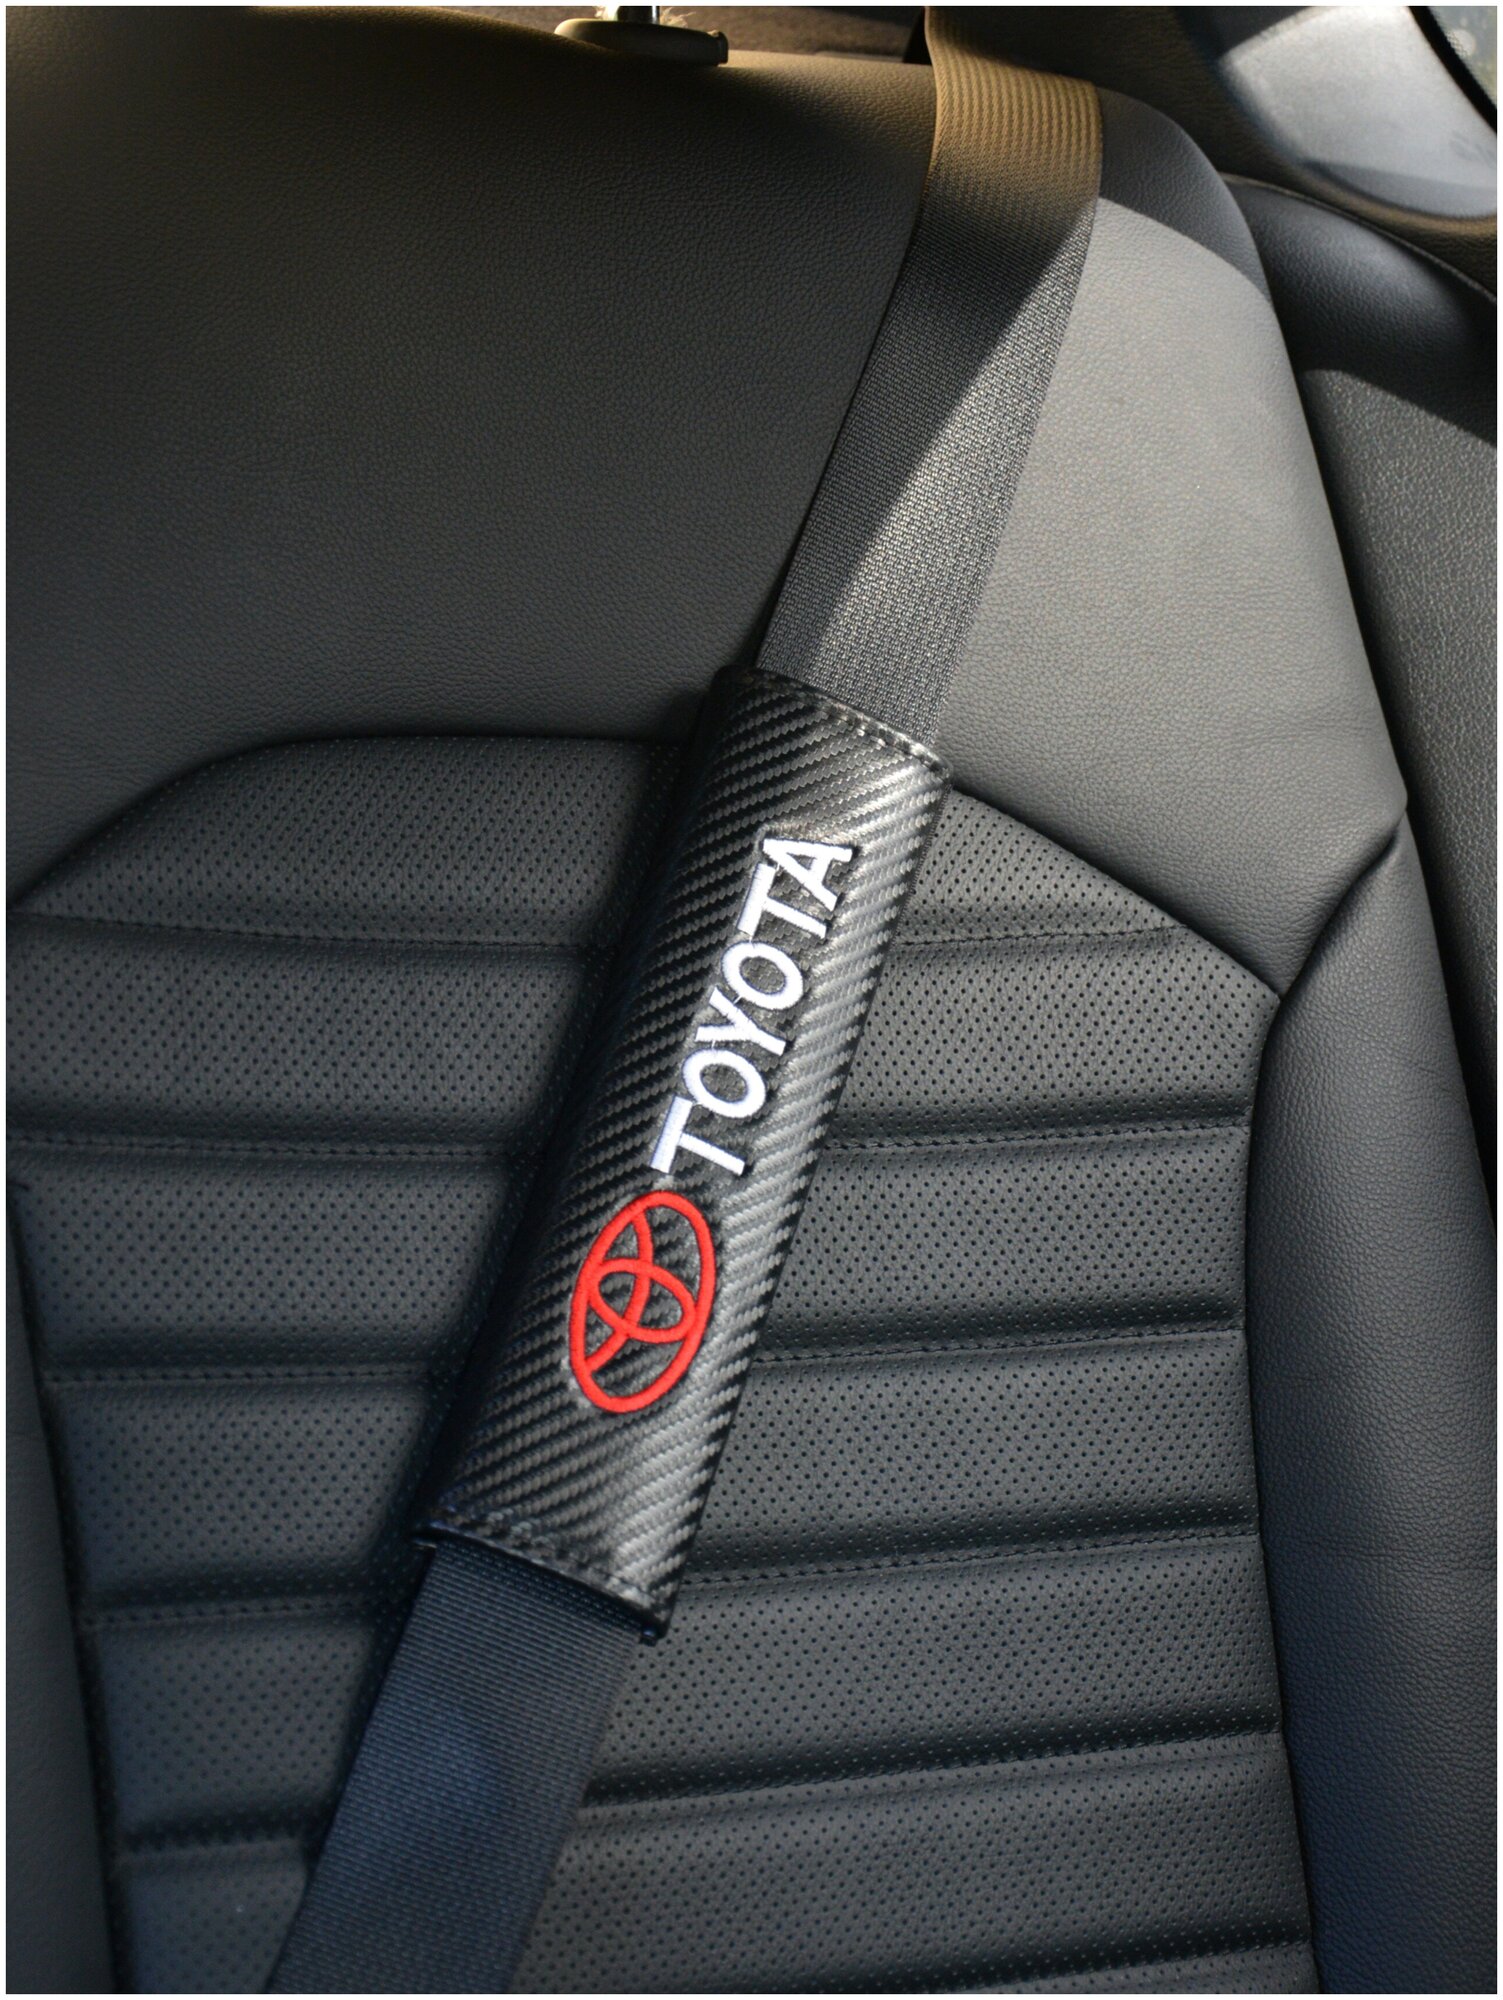 Чехол на ремень безопасности автомобиля (2шт) мягкая подкладка на ремень сумки накидка на плечо насадка накладка для авто логотип "Toyota"